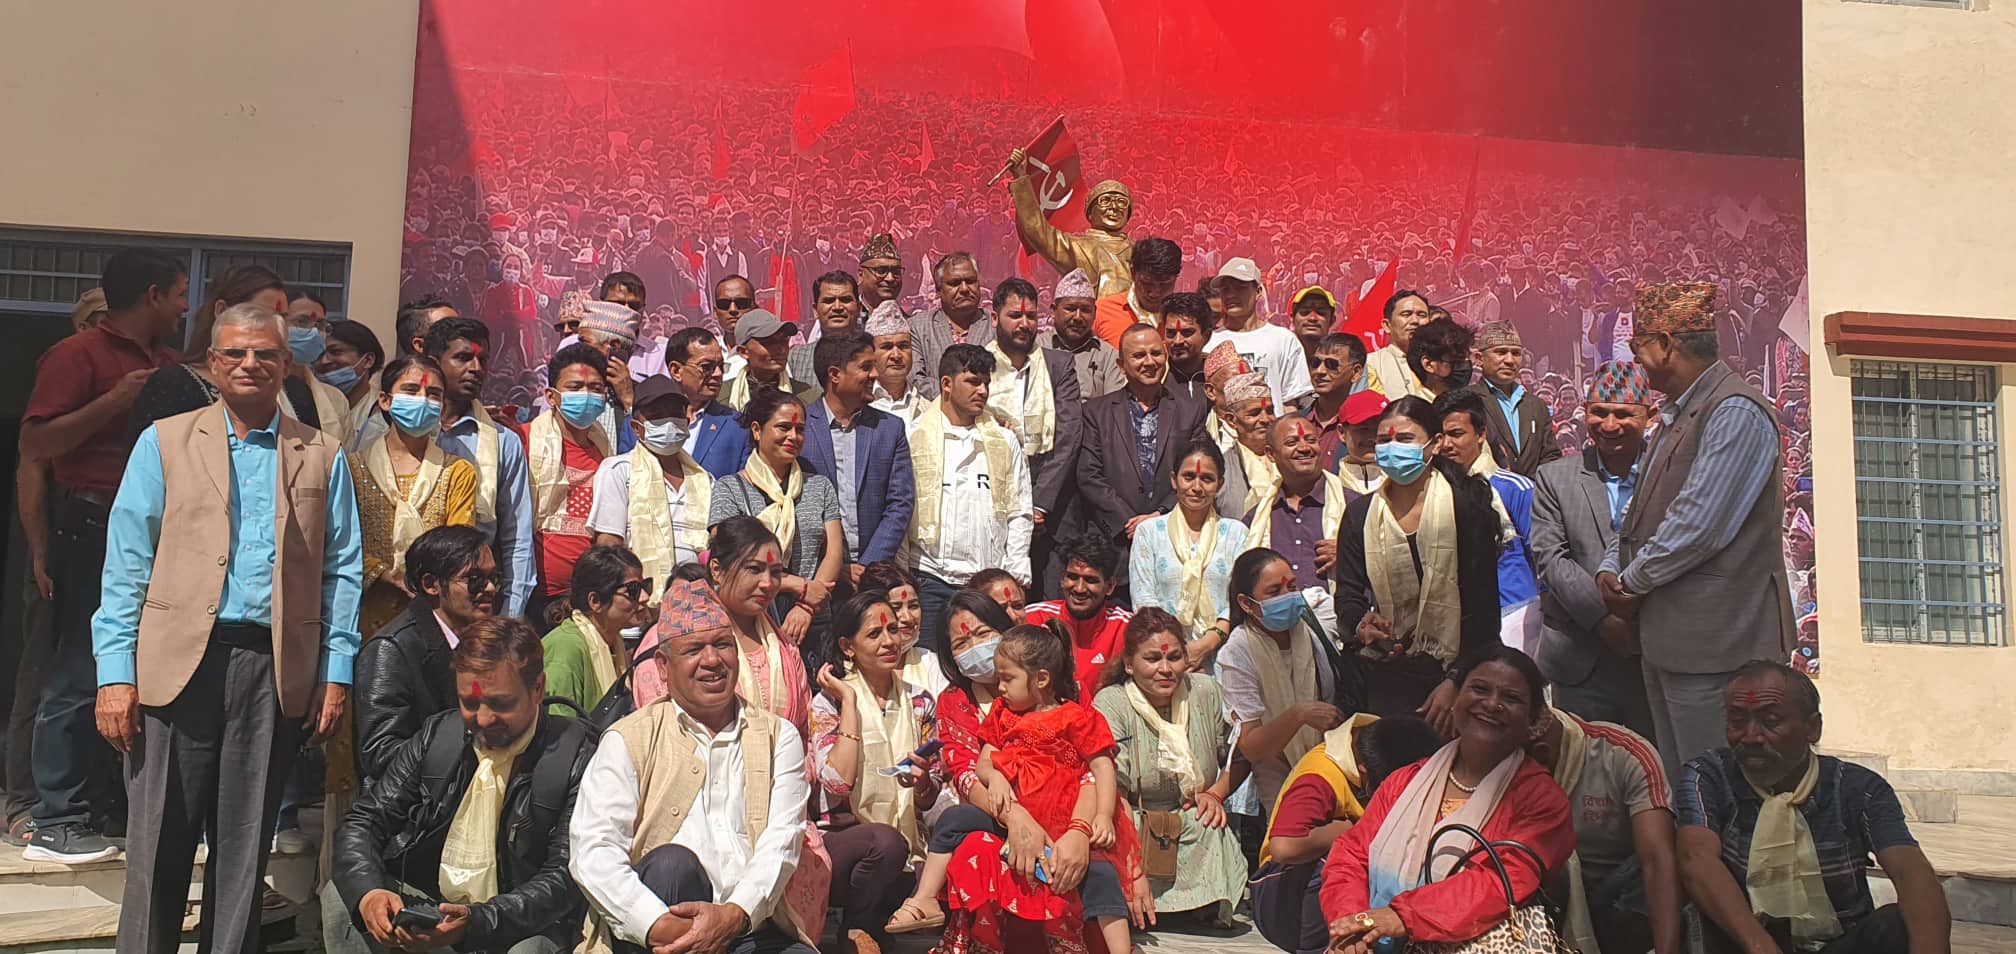 RPP Nepal leaders, including central member Dhiraj Shahi, join UML